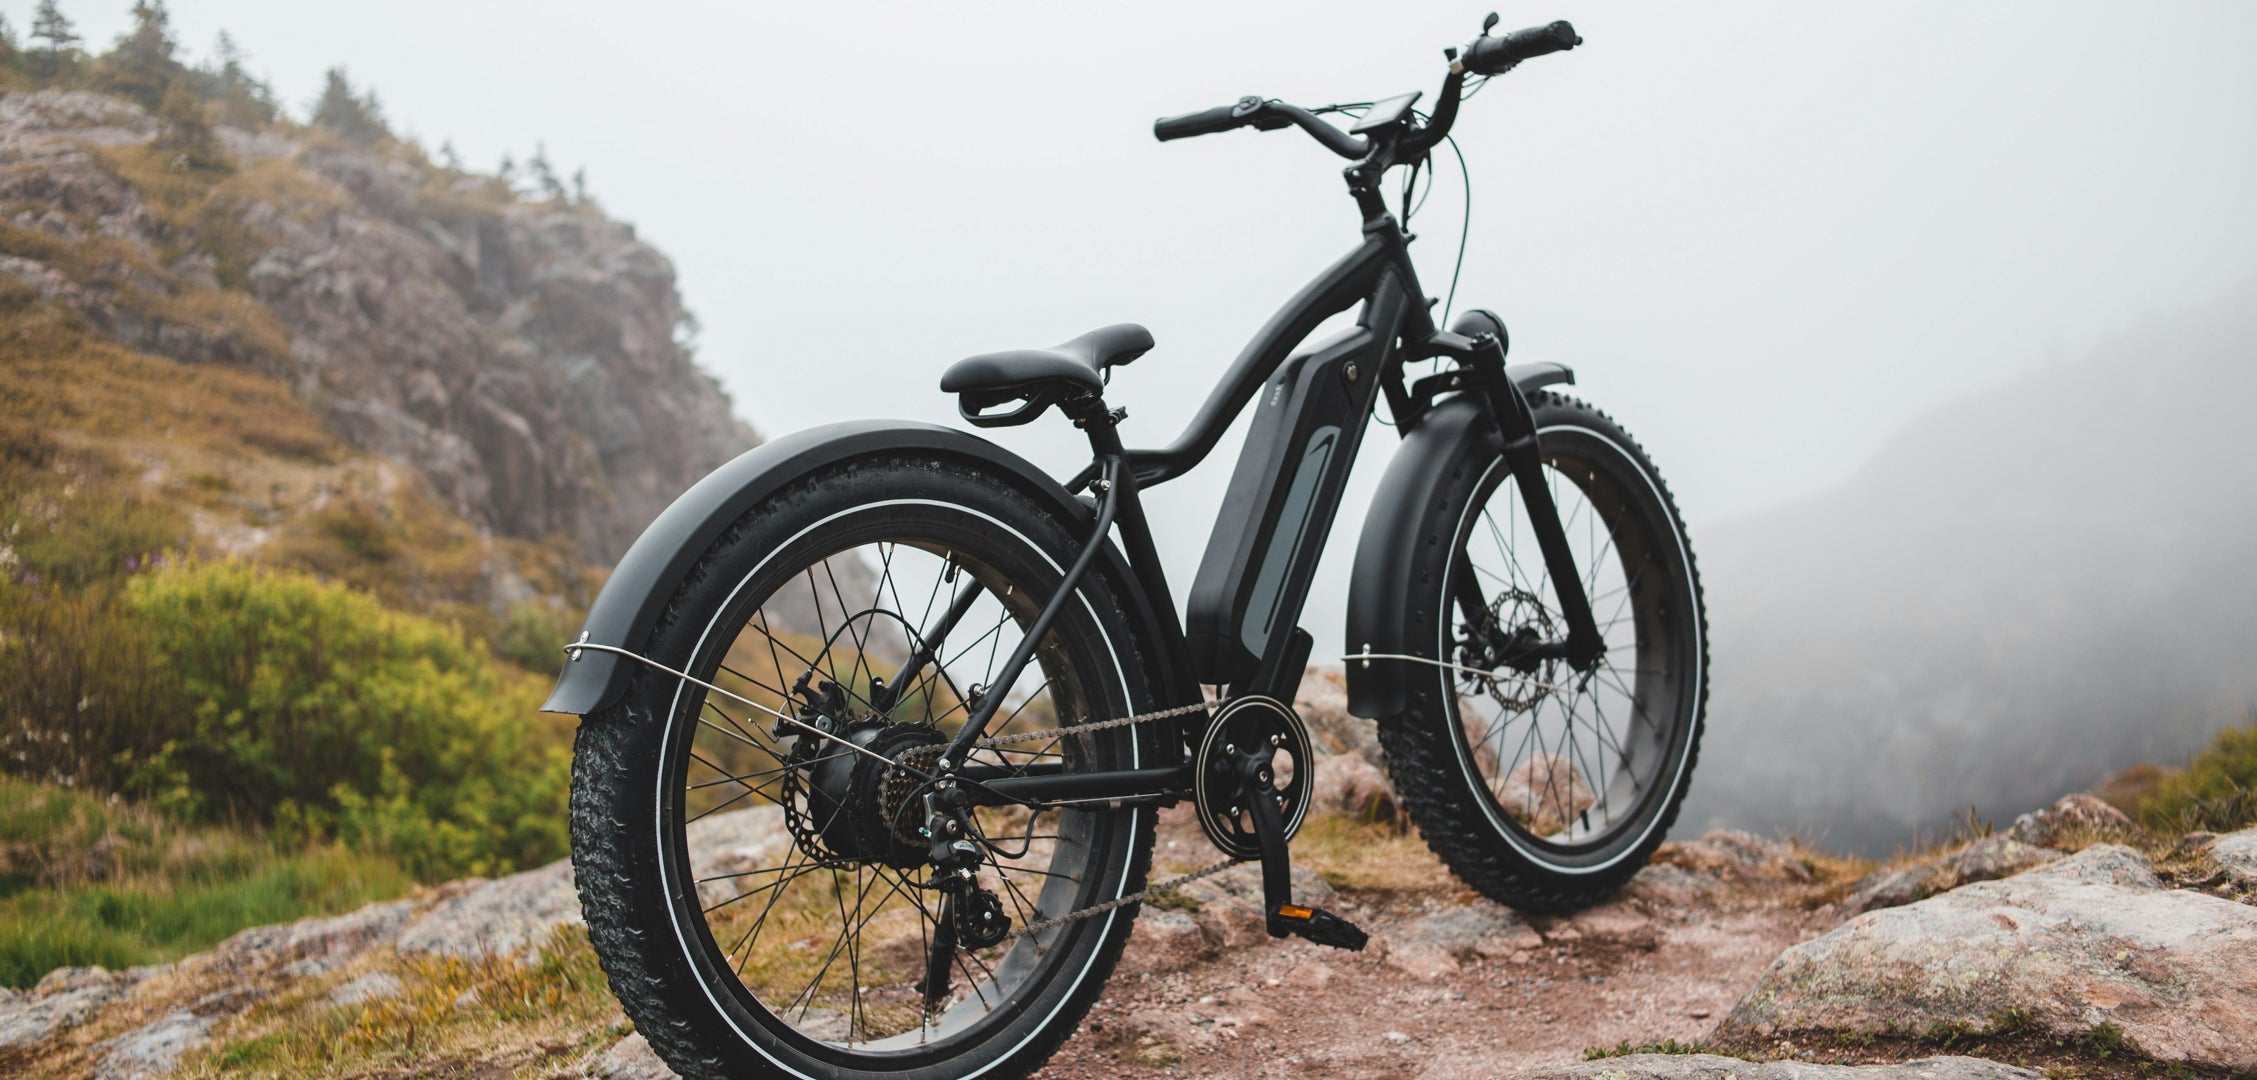 Congress Unites on E-Bike Battery Safety Bill – A Surprising Turn for E-Bike Legislation